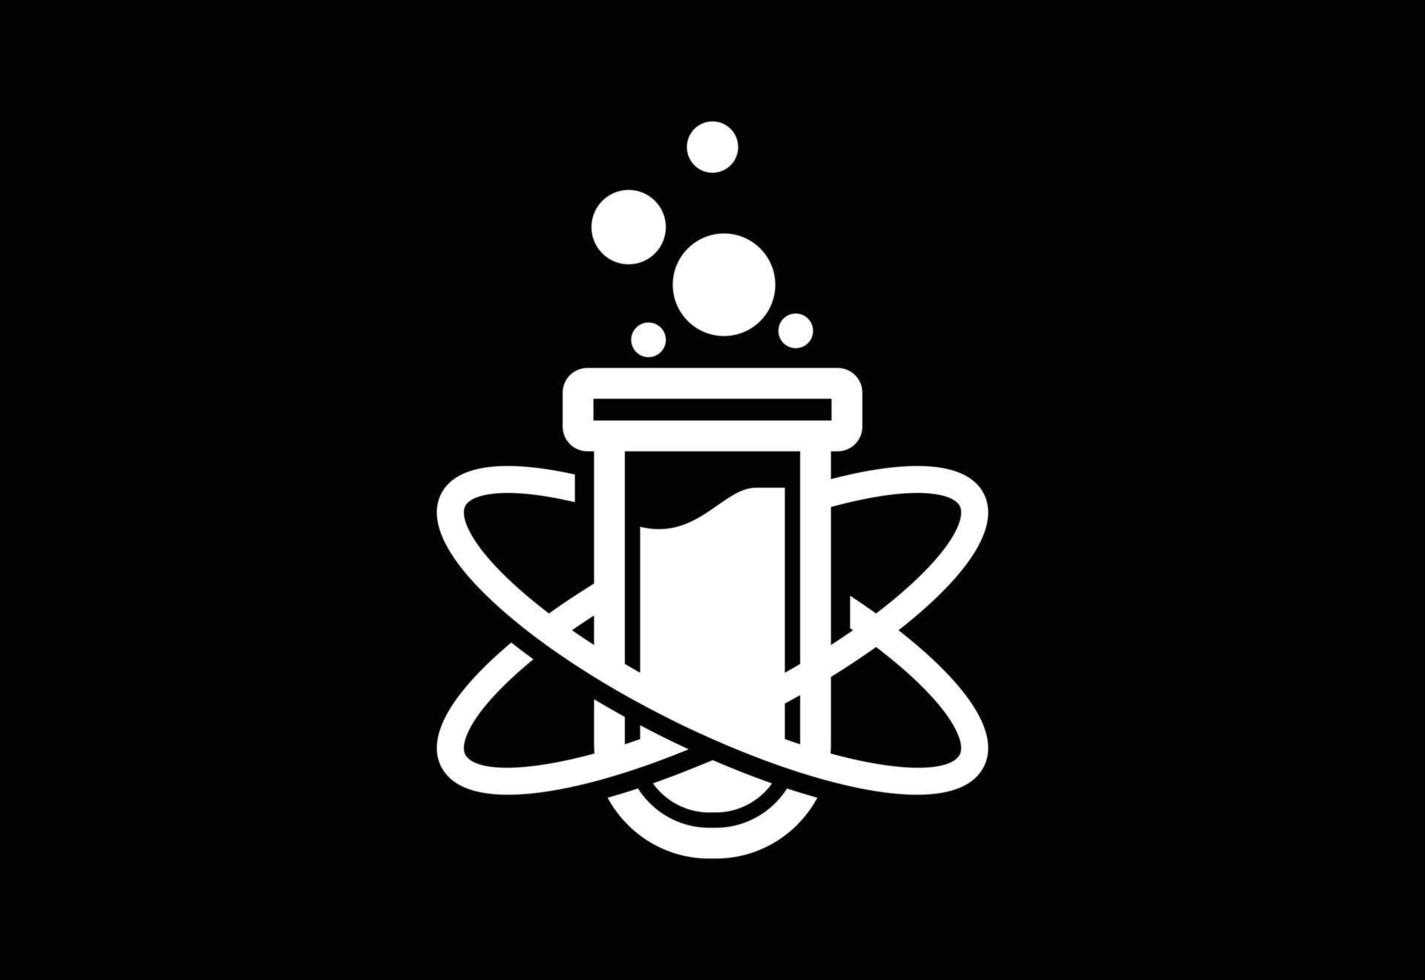 Lab logo template vector design, Lab logo science